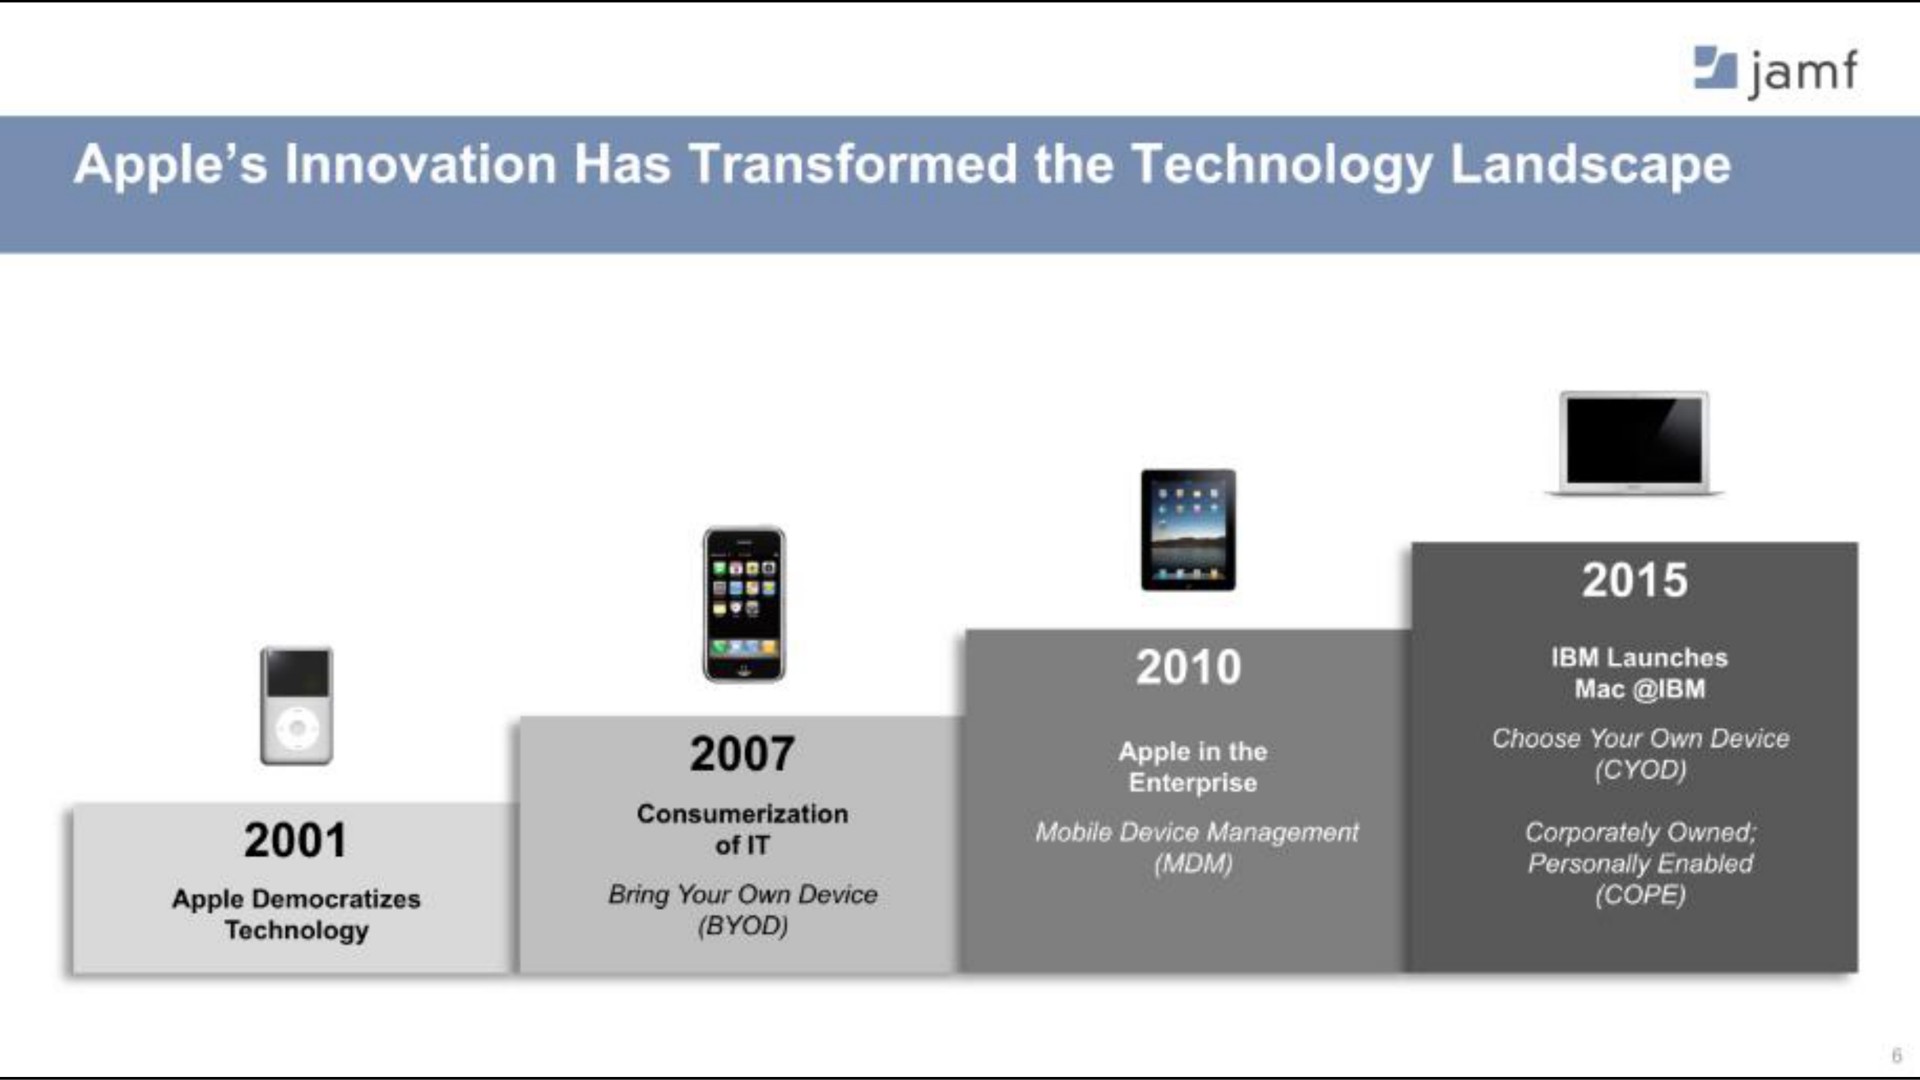 apple innovation has transformed the technology landscape a | Jamf